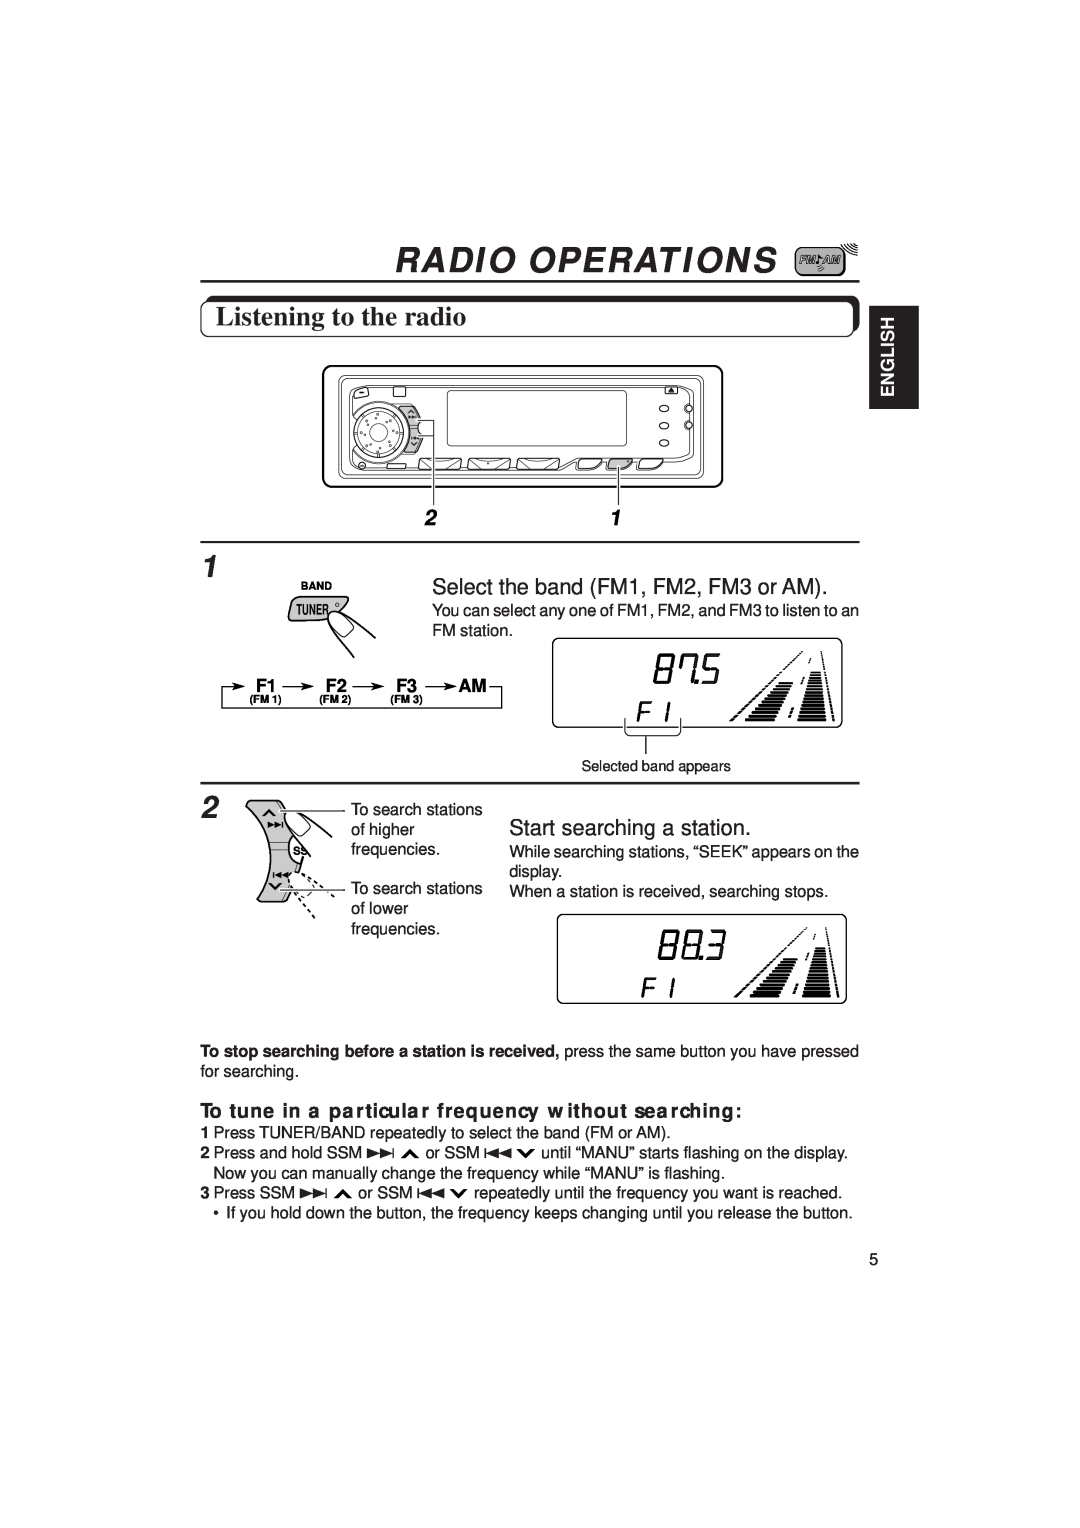 JVC KD-SX939/SX930 Radio Operations, Listening to the radio, Select the band FM1, FM2, FM3 or AM, English, FM station 